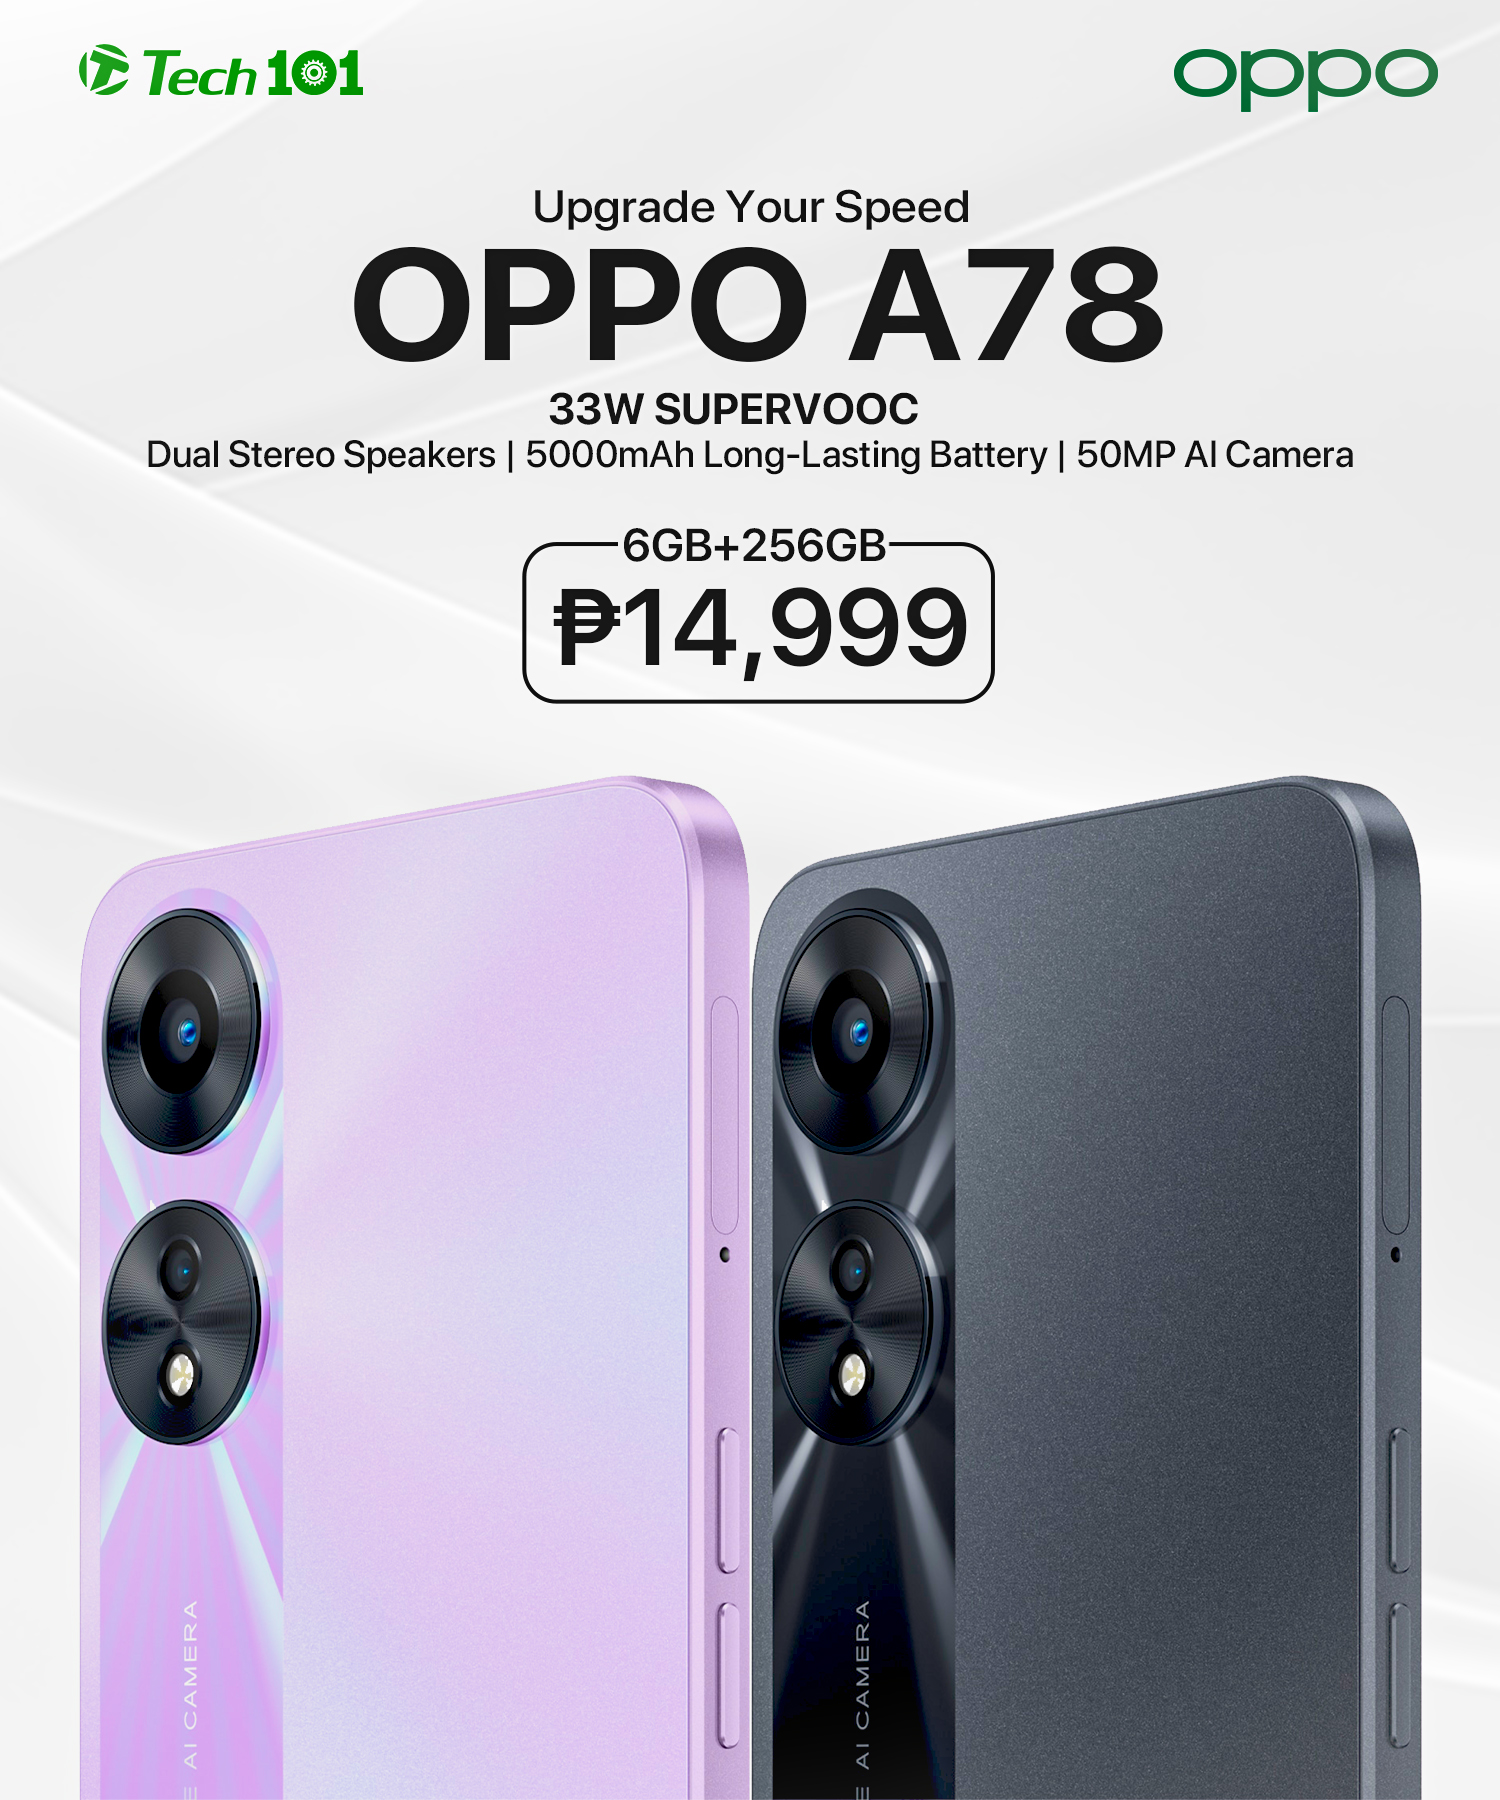 OPPO A78 5G  OPPO Philippines